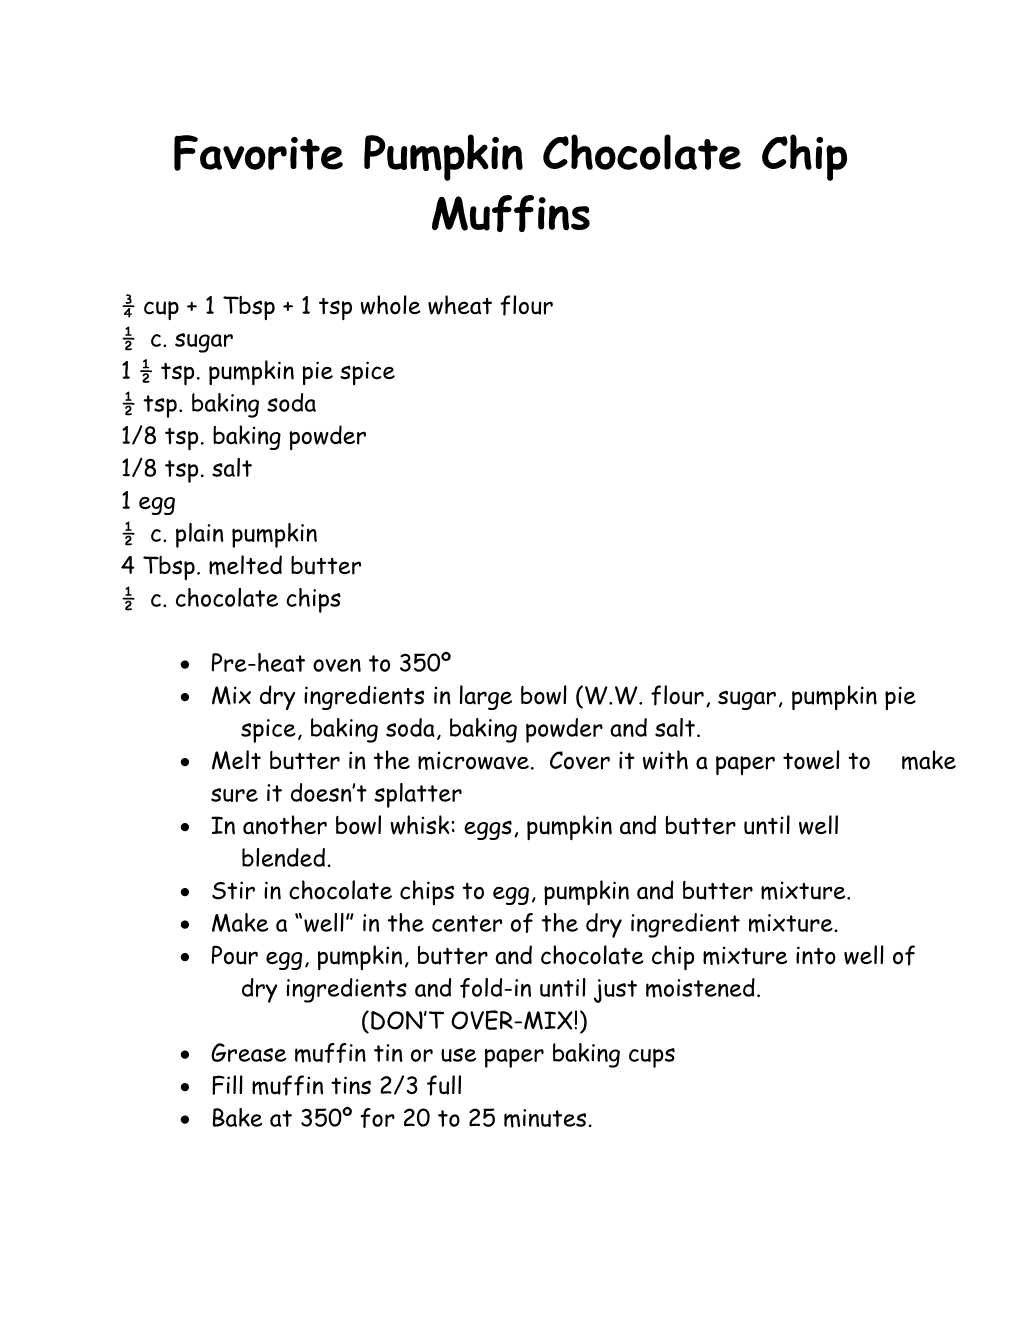 Favorite Pumpkin Chocolate Chip Muffins